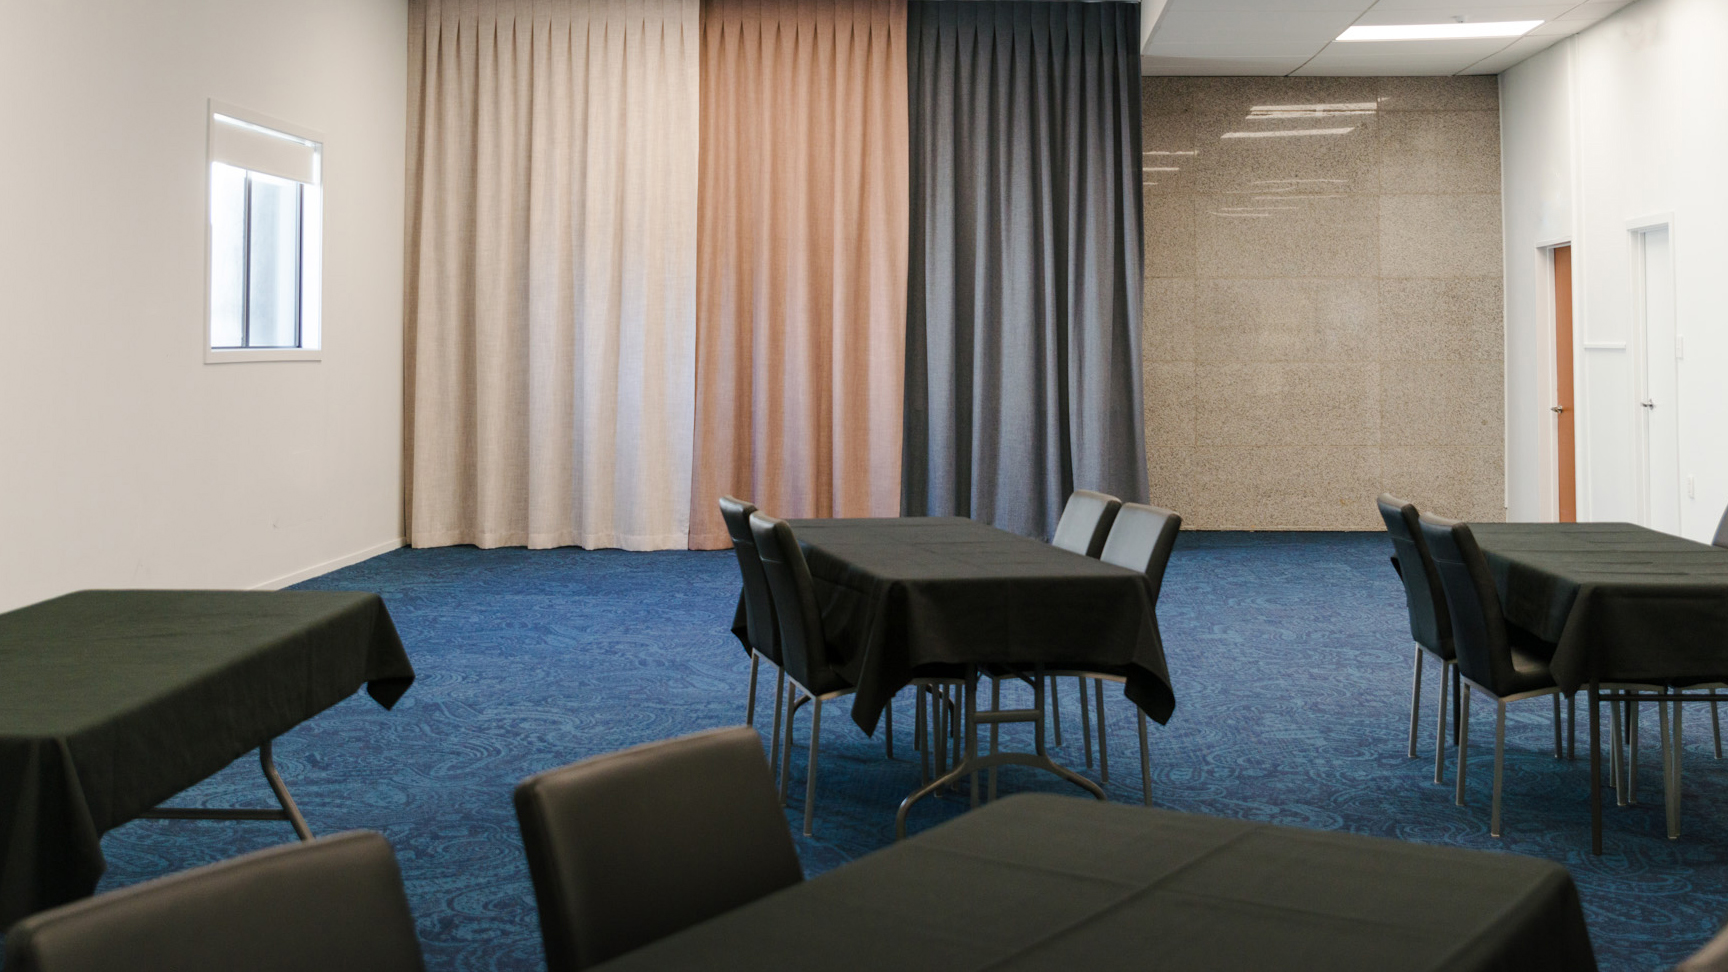 Dunedin design company completes a modern interior design for hotel thumbnail